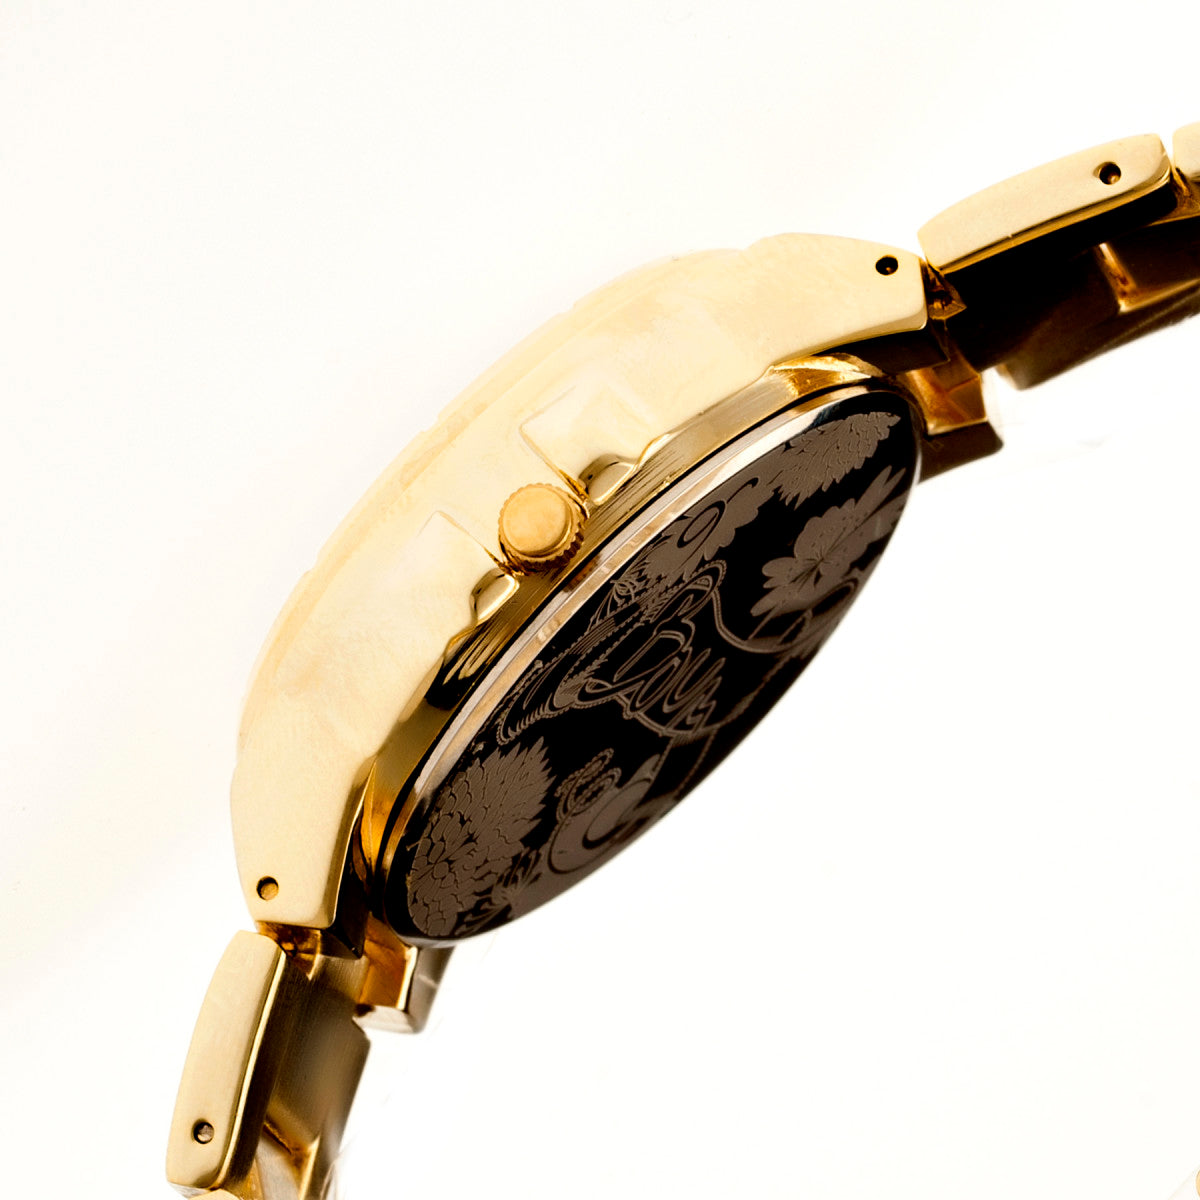 Boum Cachet Crystal-Dial Ladies Bracelet Watch - Gold/Fuchsia - BOUBM2304